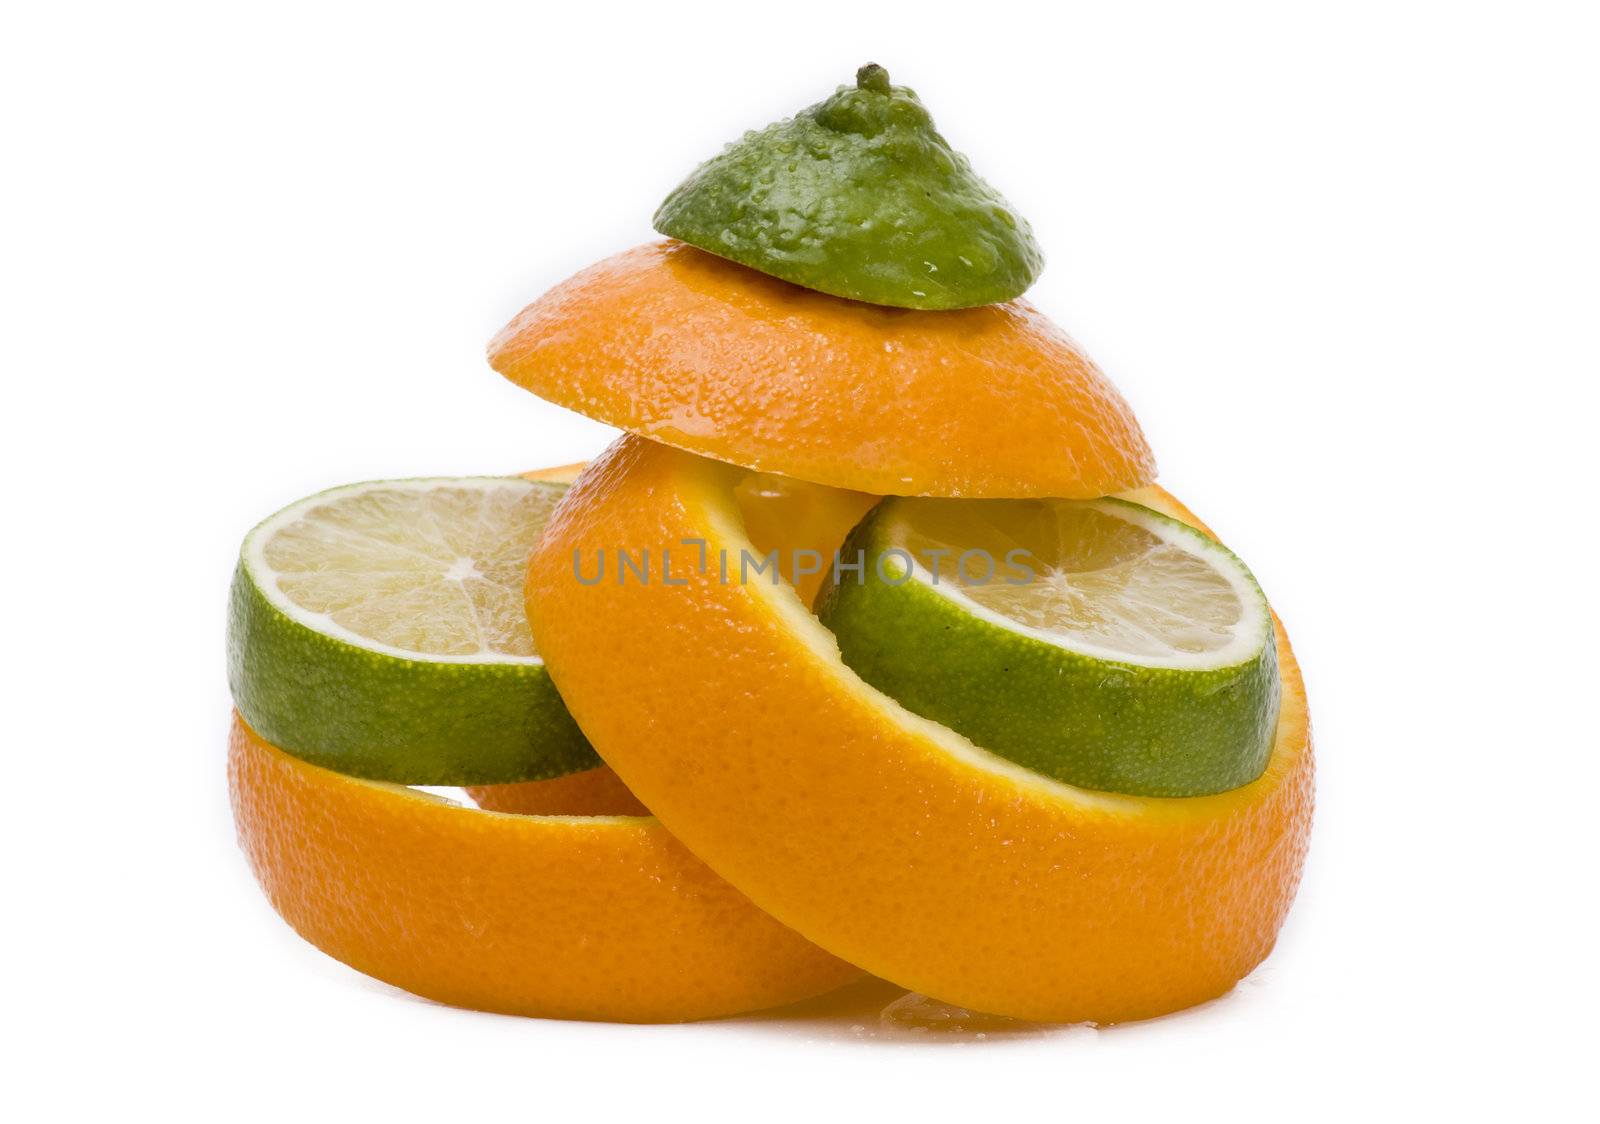 Lime slices in orange peels by caldix